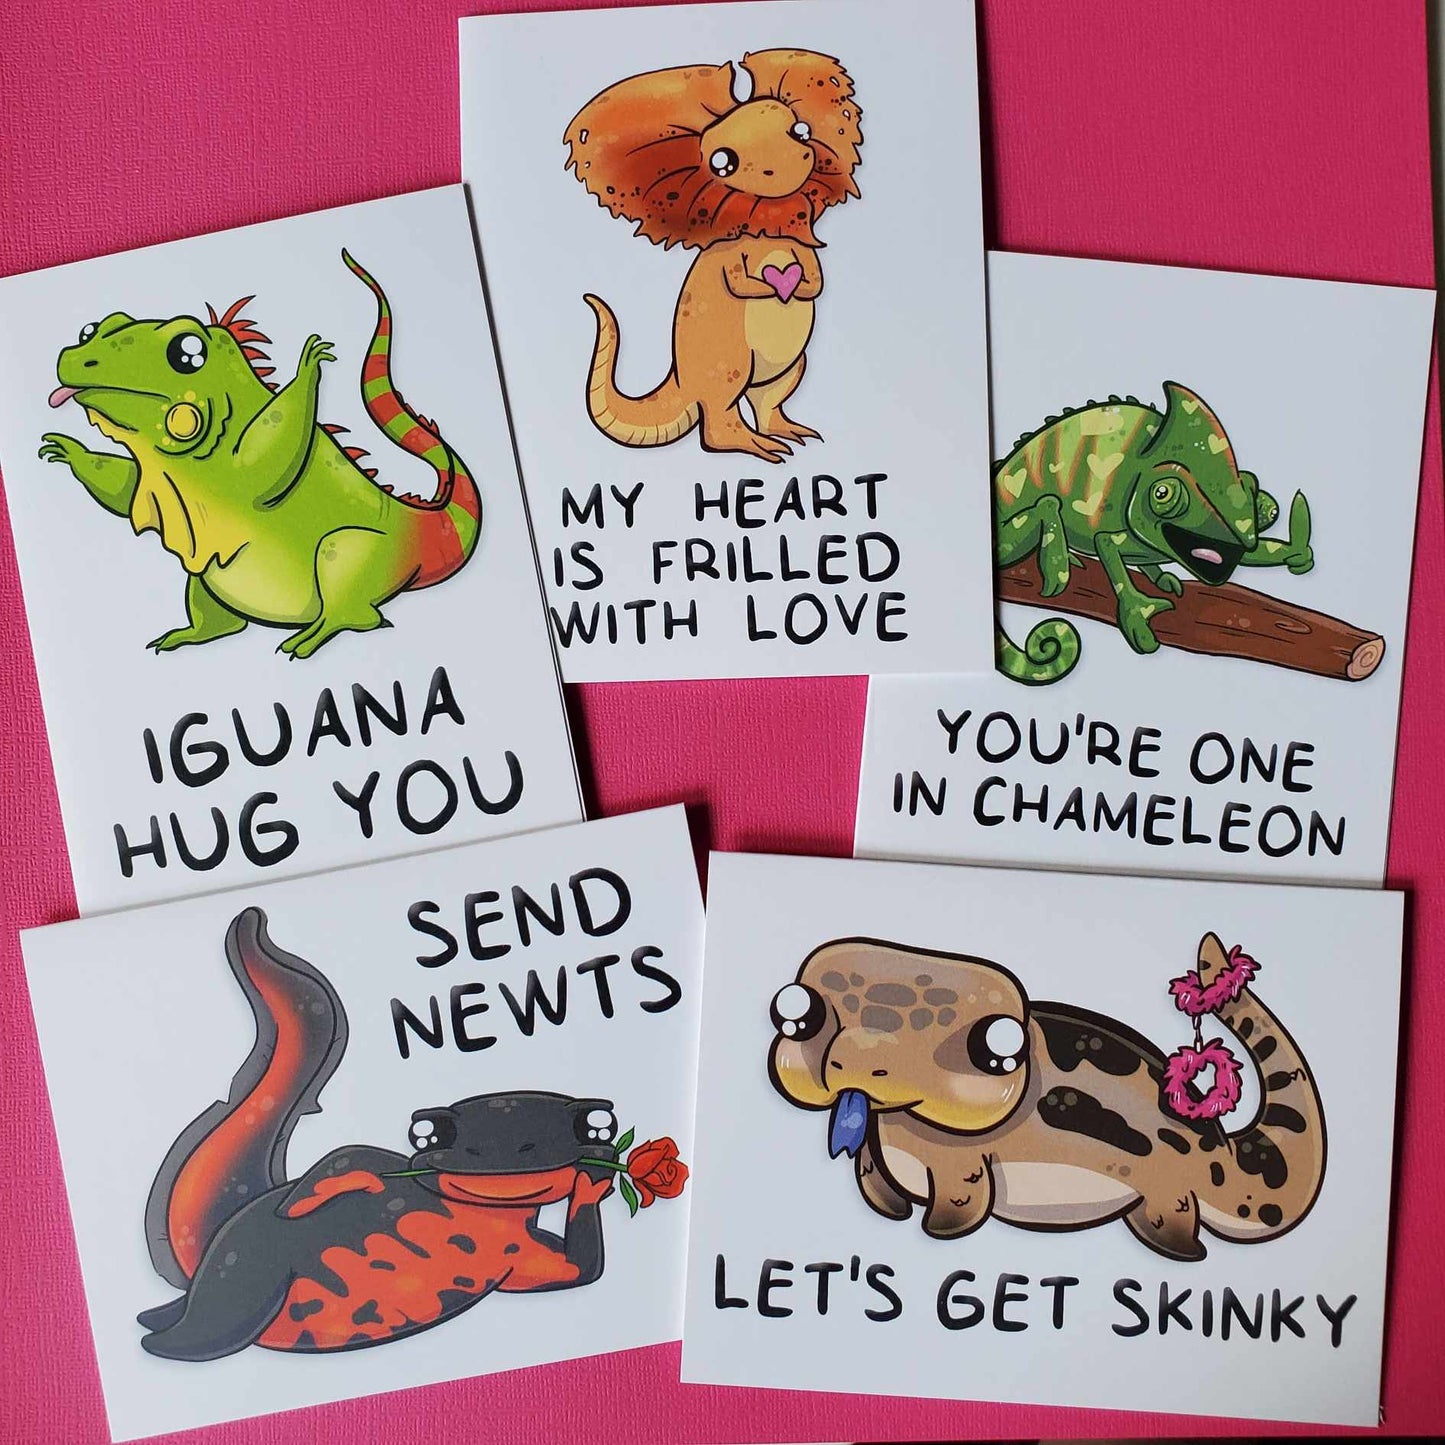 Love Lizard Greeting Card Pack